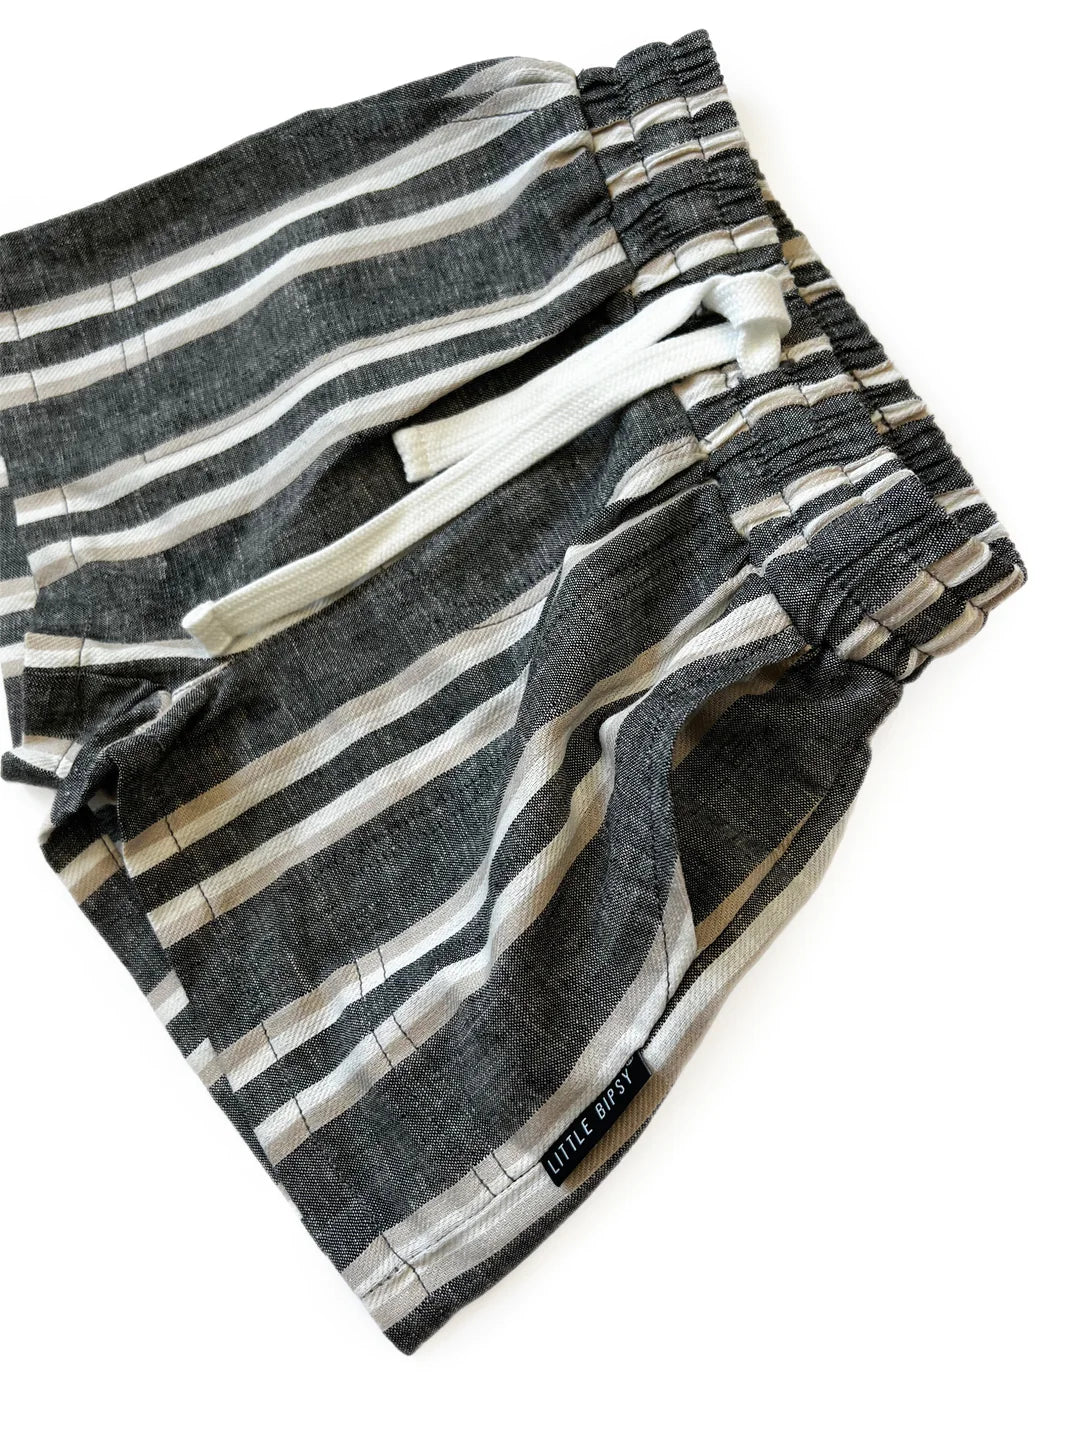 Linen Shorts- Charcoal Stripe